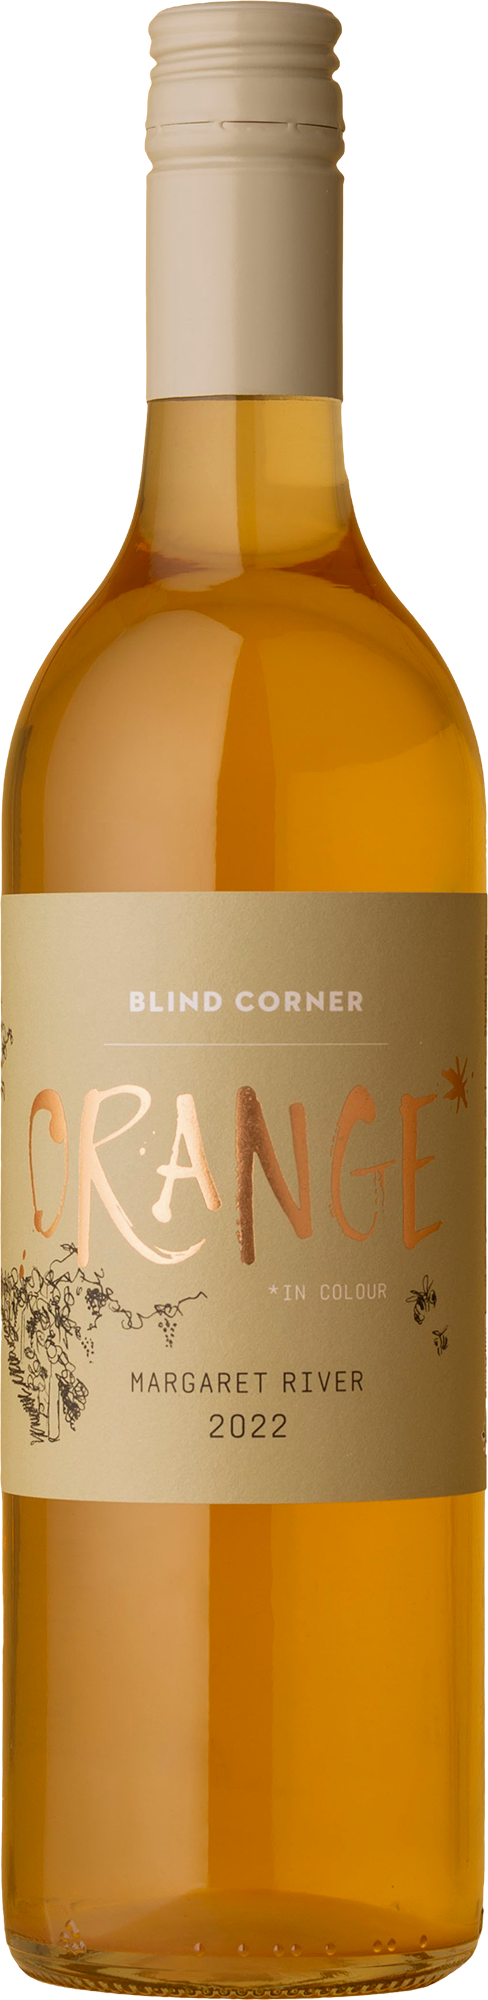 Blind Corner - Orange In Colour 2022 Orange Wine